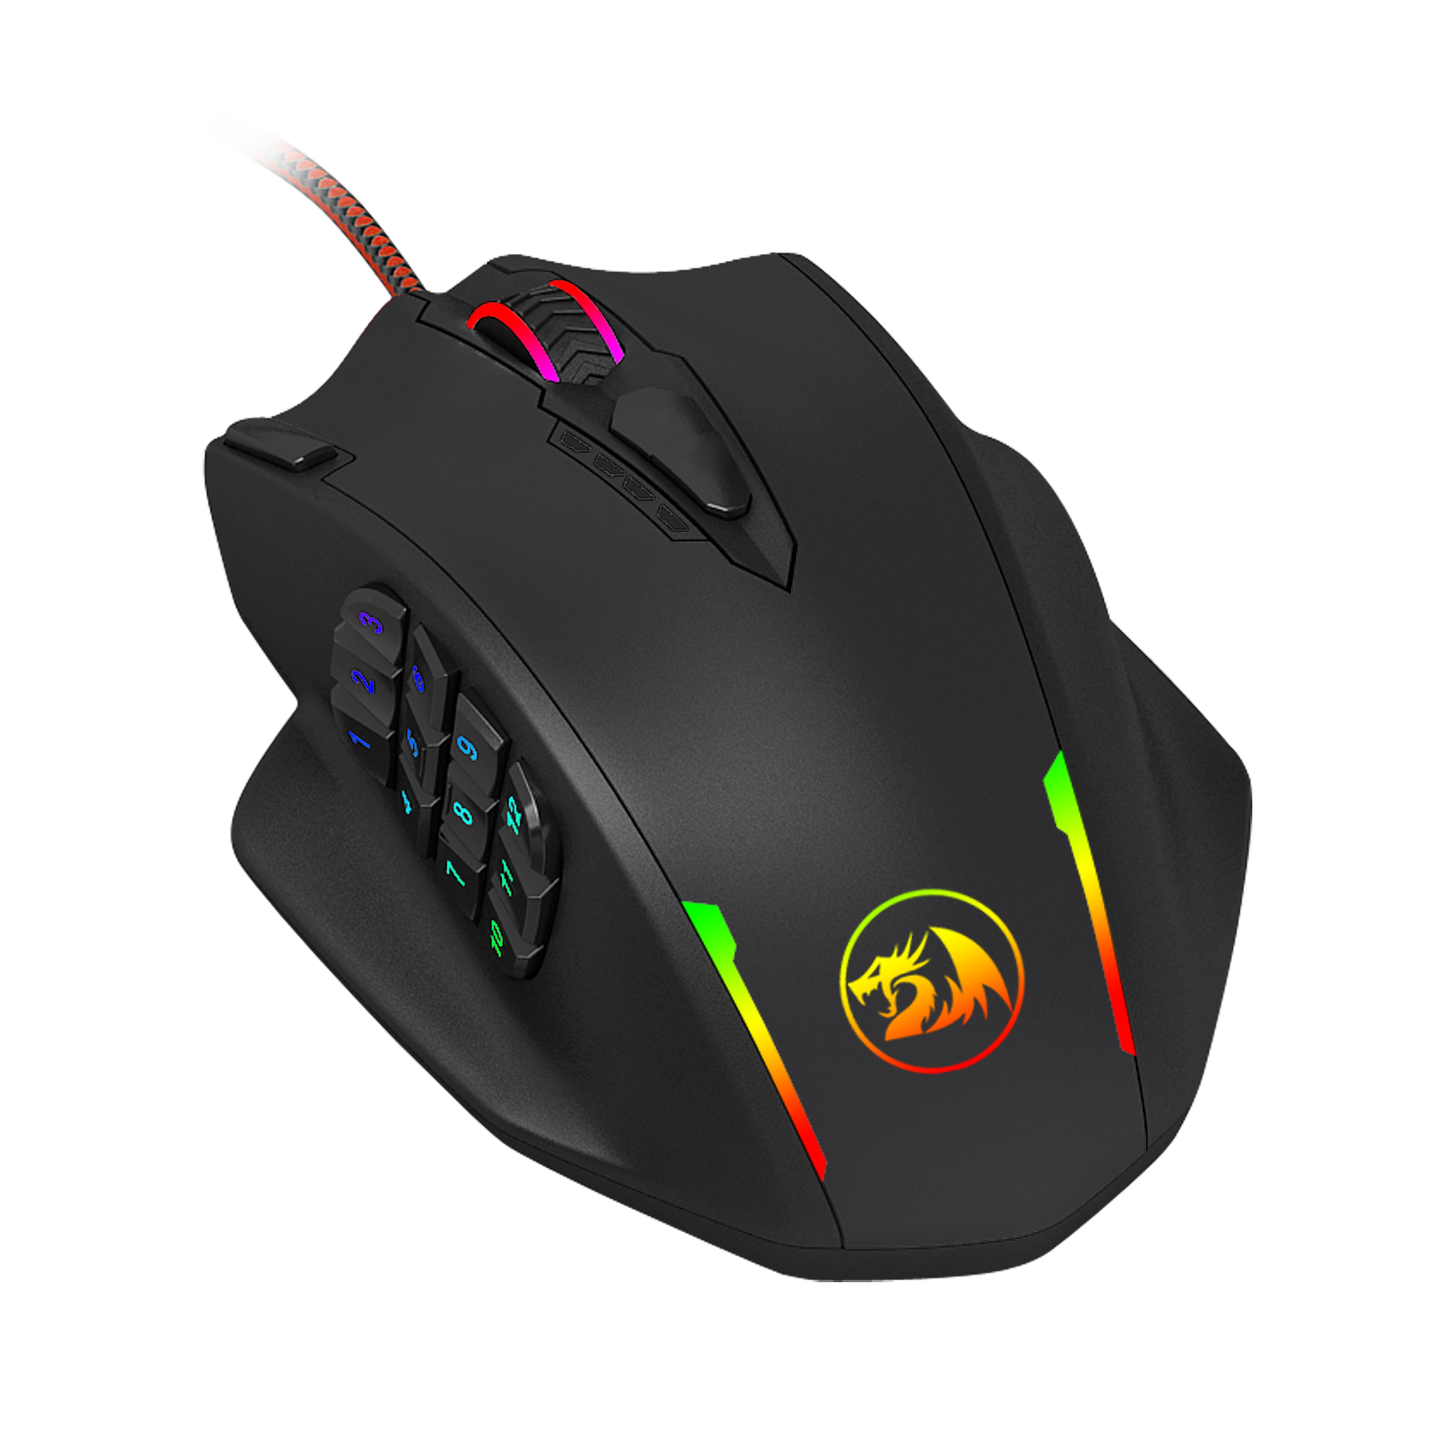 REDRAGON IMPACT 12400DPI MMO Gaming Mouse - Black